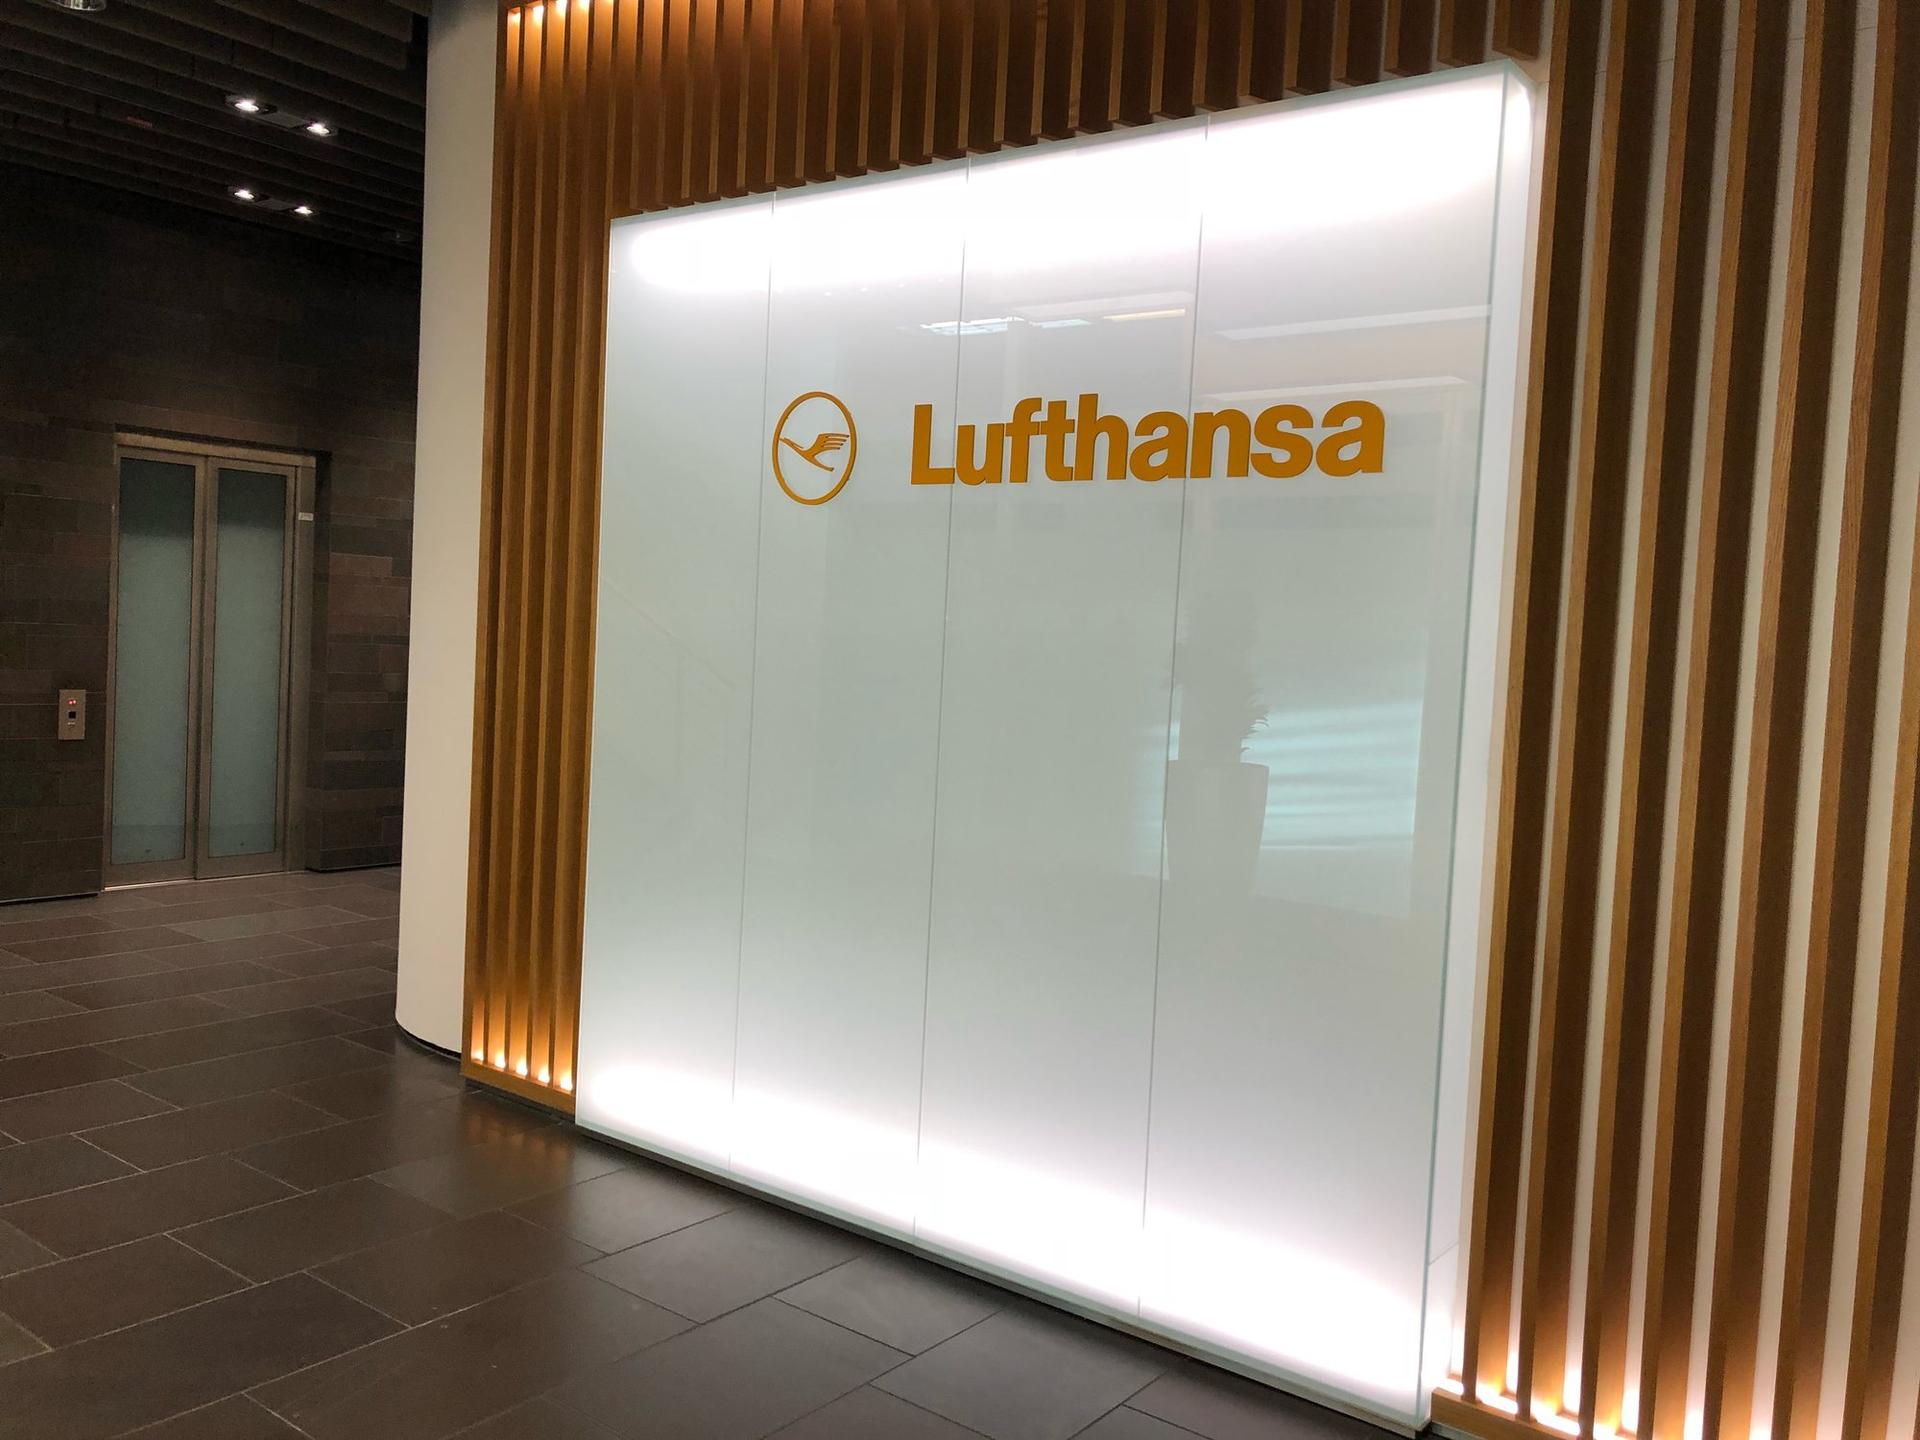 Lufthansa First Class Lounge image 30 of 42